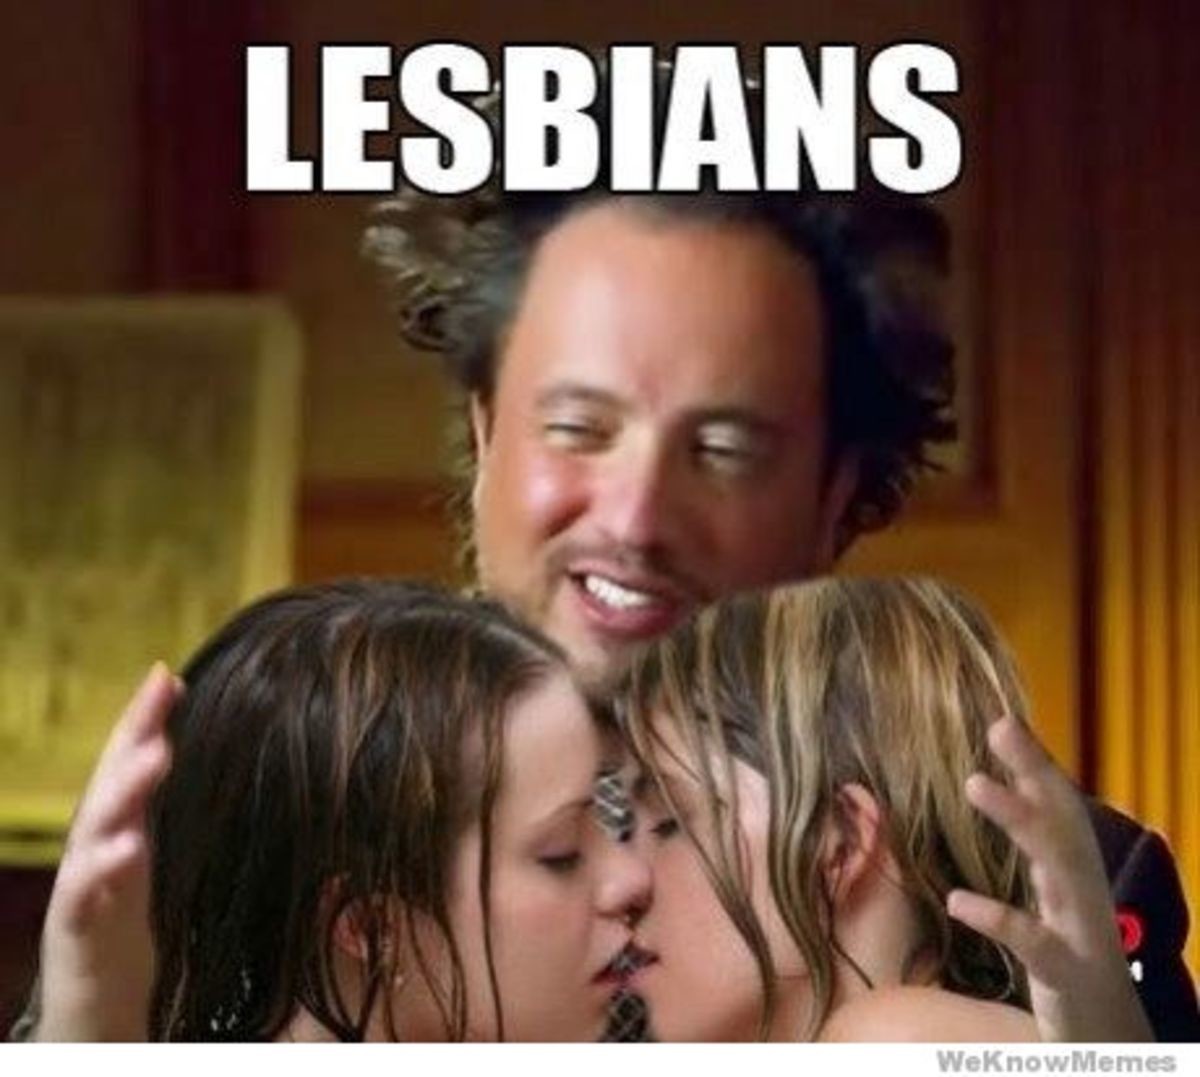 Funny lesbian meme